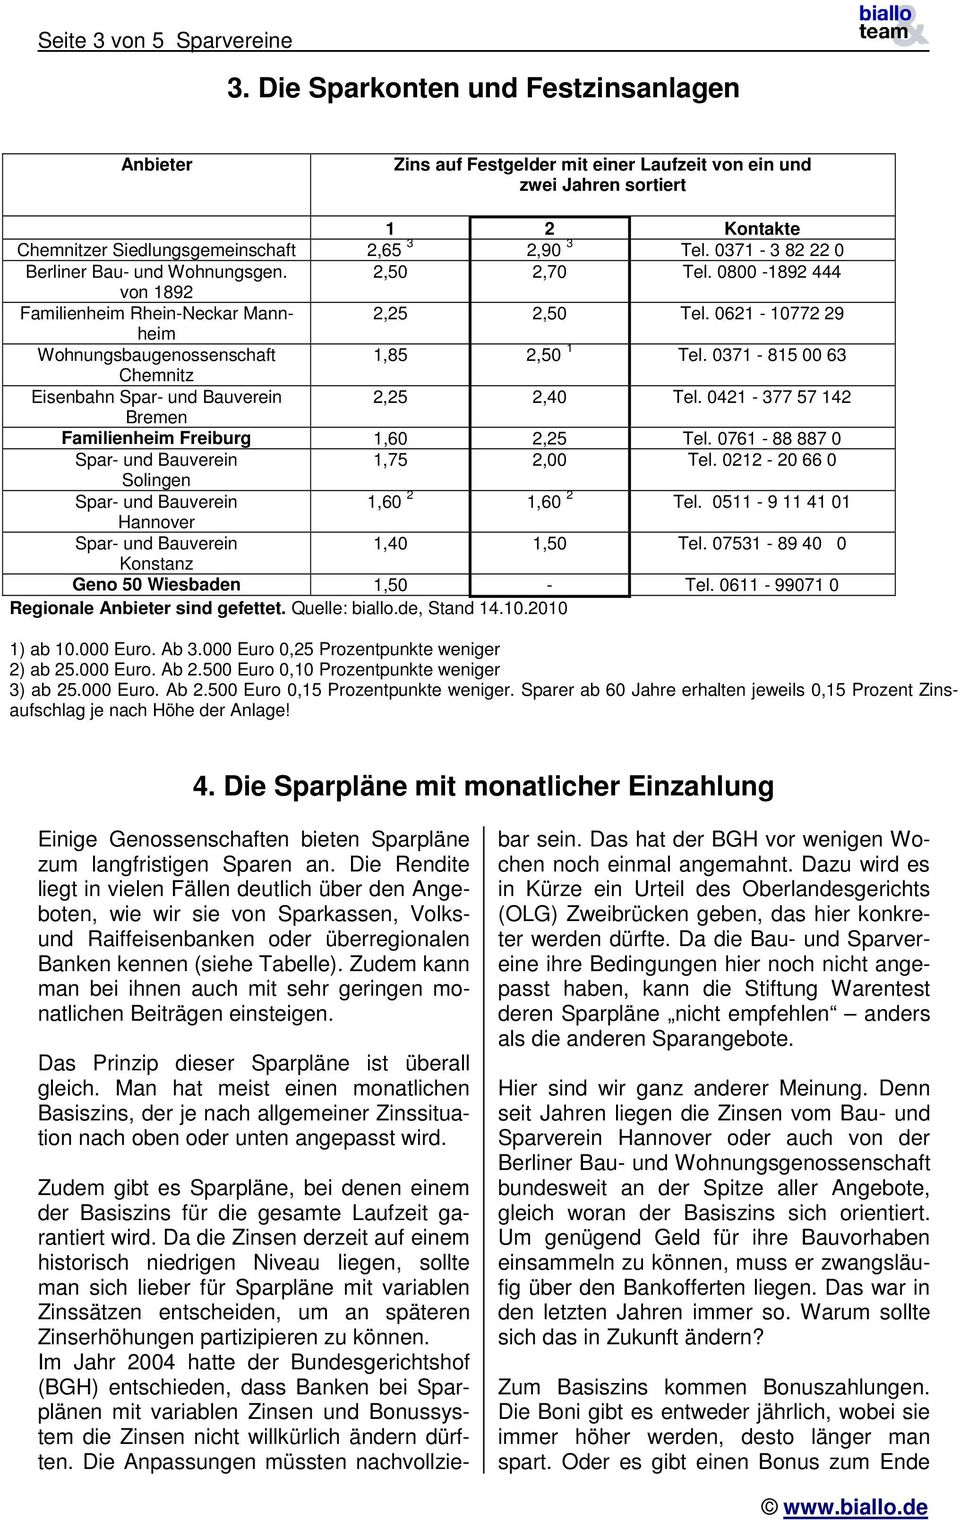 0371-815 00 63 Chemnitz Eisenbahn 2,25 2,40 Tel. 0421-377 57 142 Bremen Familienheim Freiburg 1,60 2,25 Tel. 0761-88 887 0 1,75 2,00 Tel. 0212-20 66 0 Solingen 1,60 2 1,60 2 Tel.